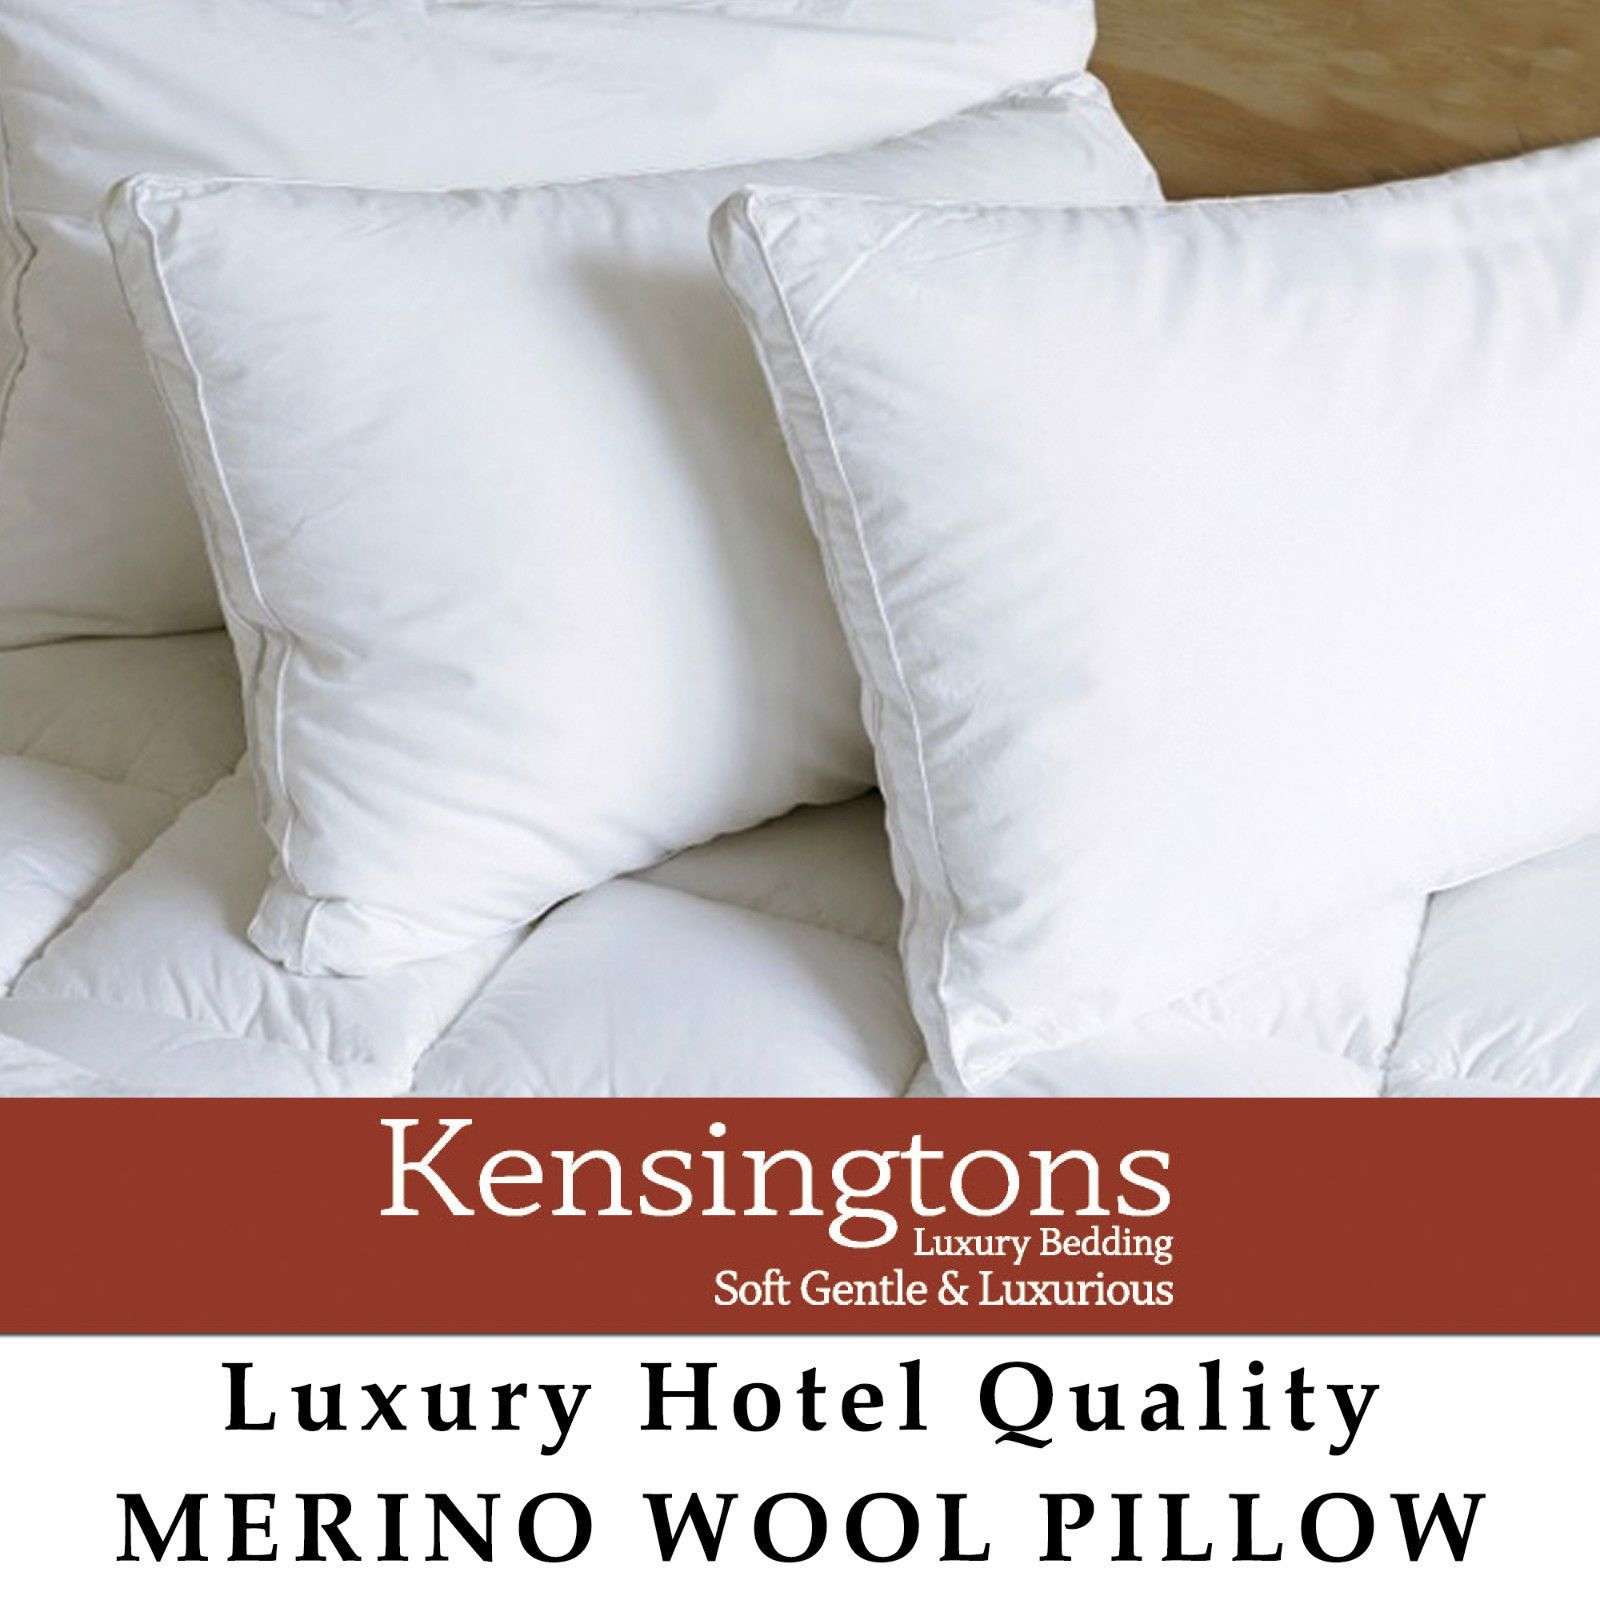 Natural-Merino-Wool-Filled-2-x-Pillow-1000G